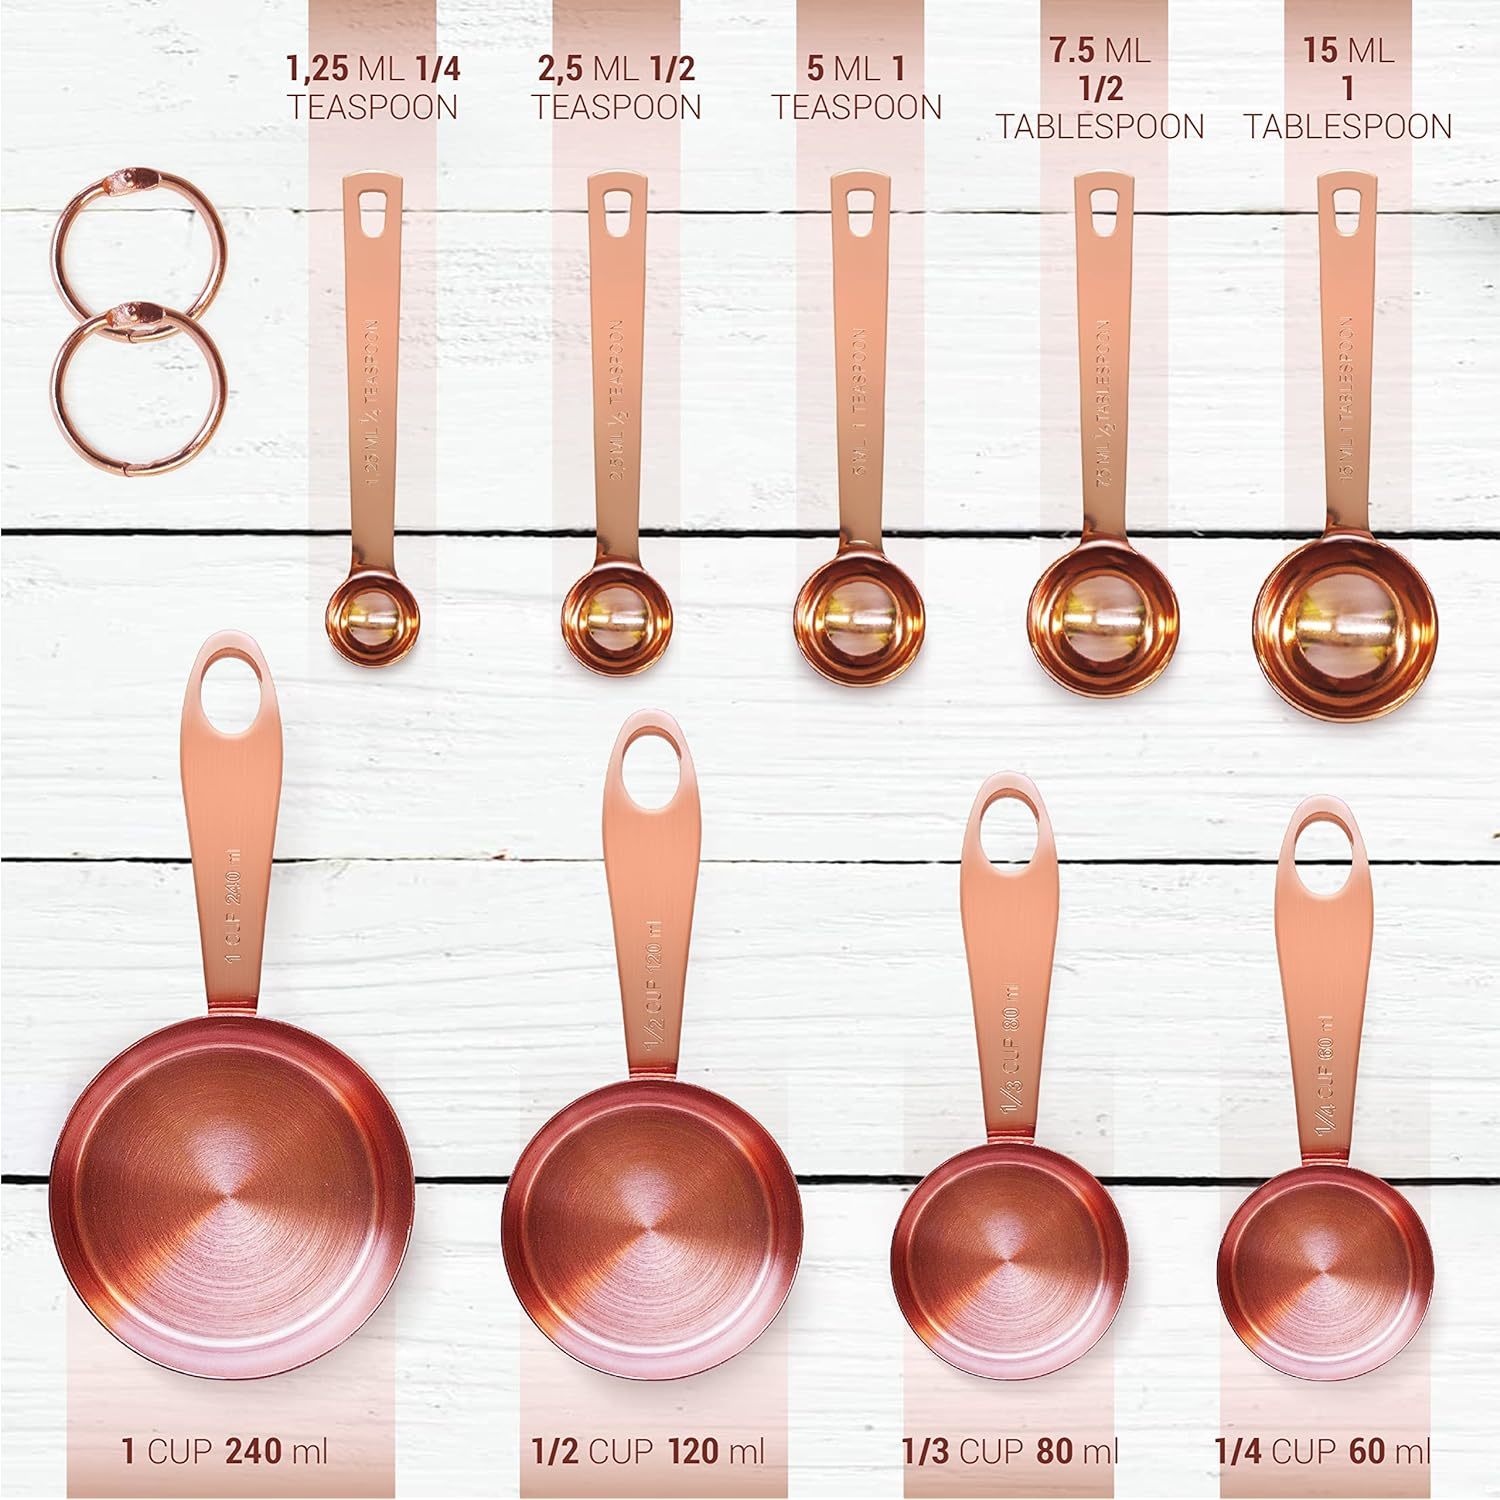 Measuring Spoons Set 5pc - Mini Gold Measuring Spoons Teaspoon Measure Spoon for Dry or Liquid Ingredients, Tiny Metal Measuring Spoons Tad Dash